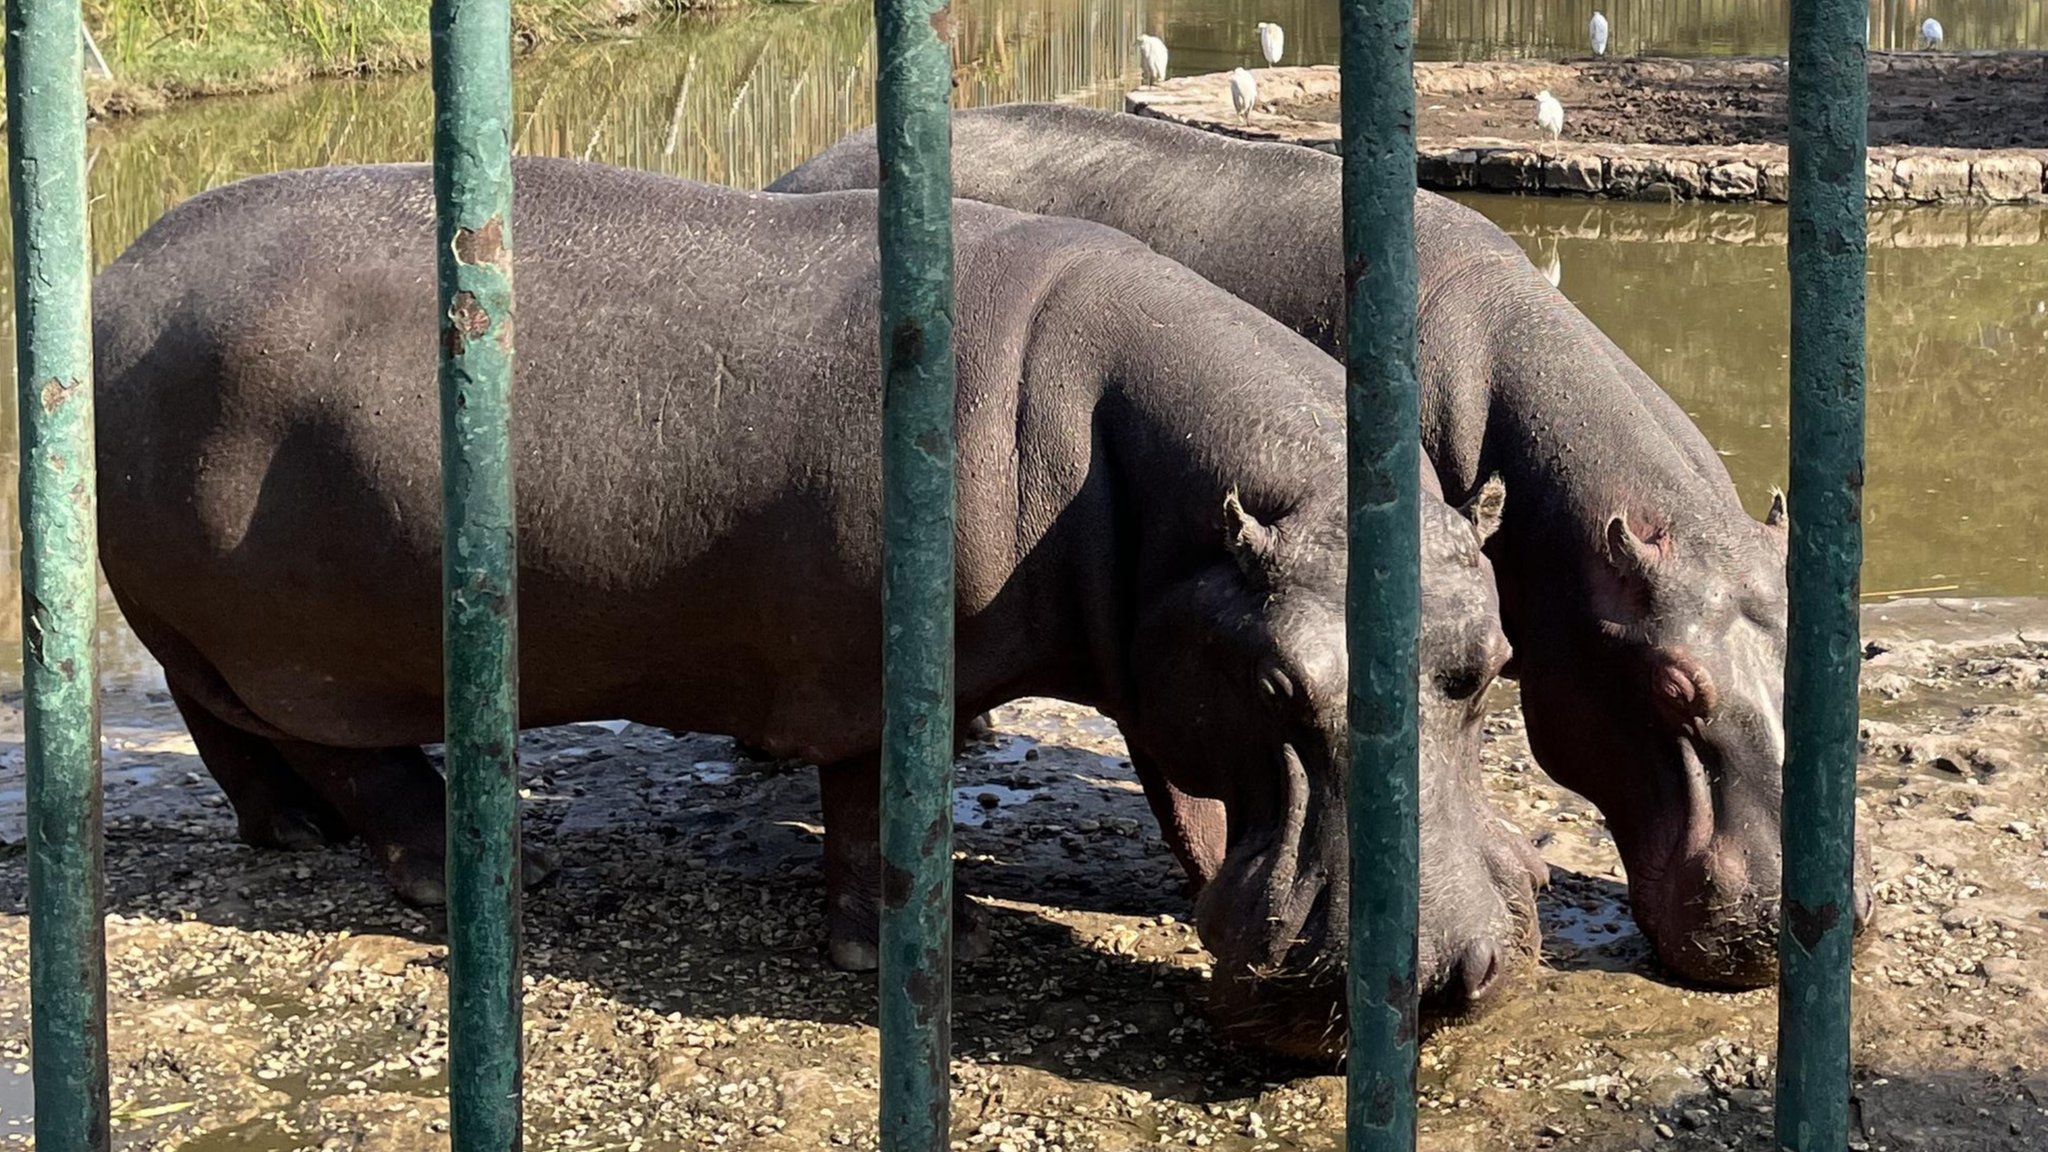 Egypt zoo overhaul plan raises animal welfare fears - BBC News